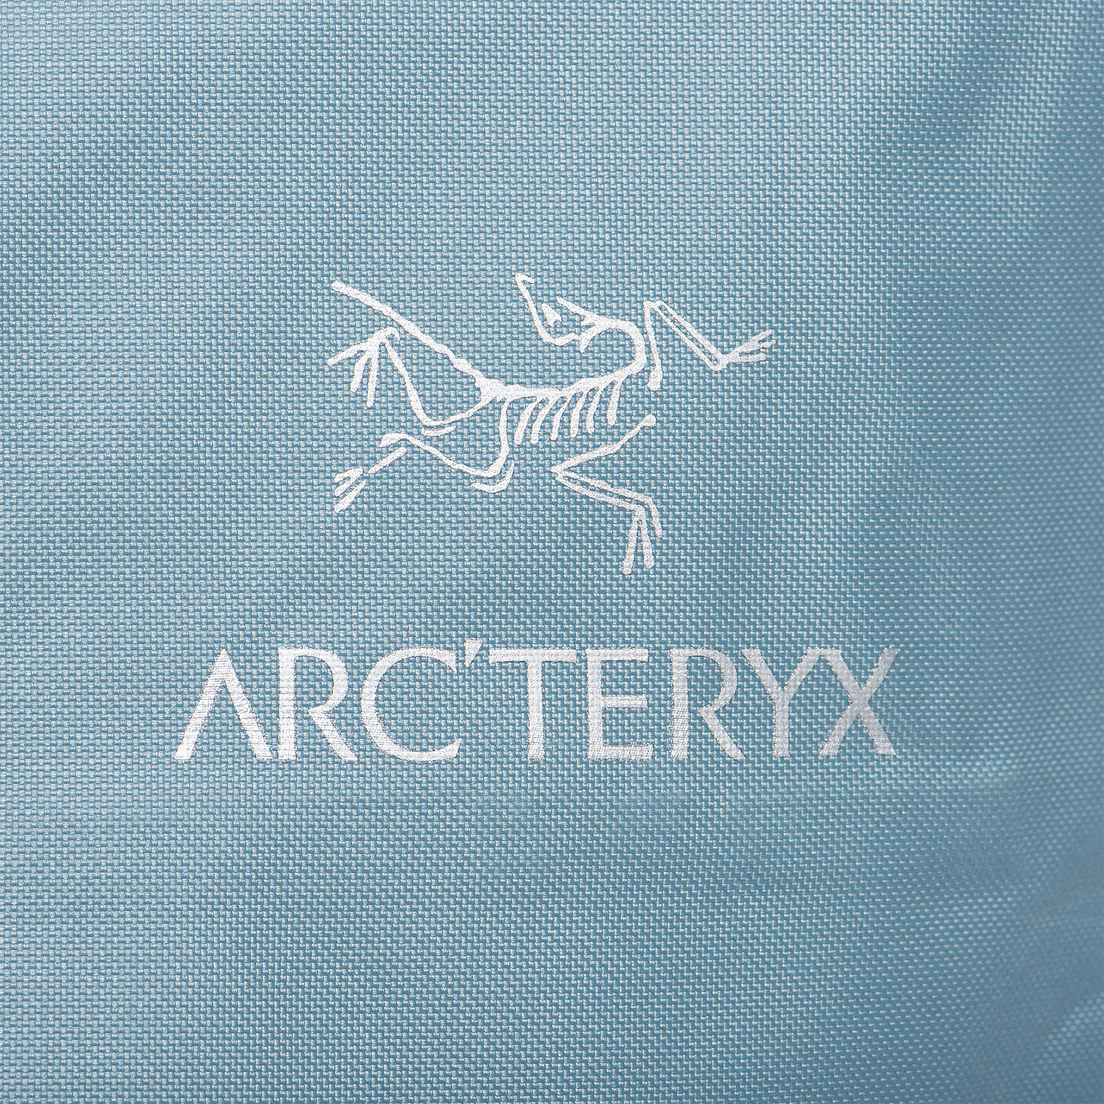 Arcteryx Рюкзак Granville Daypack